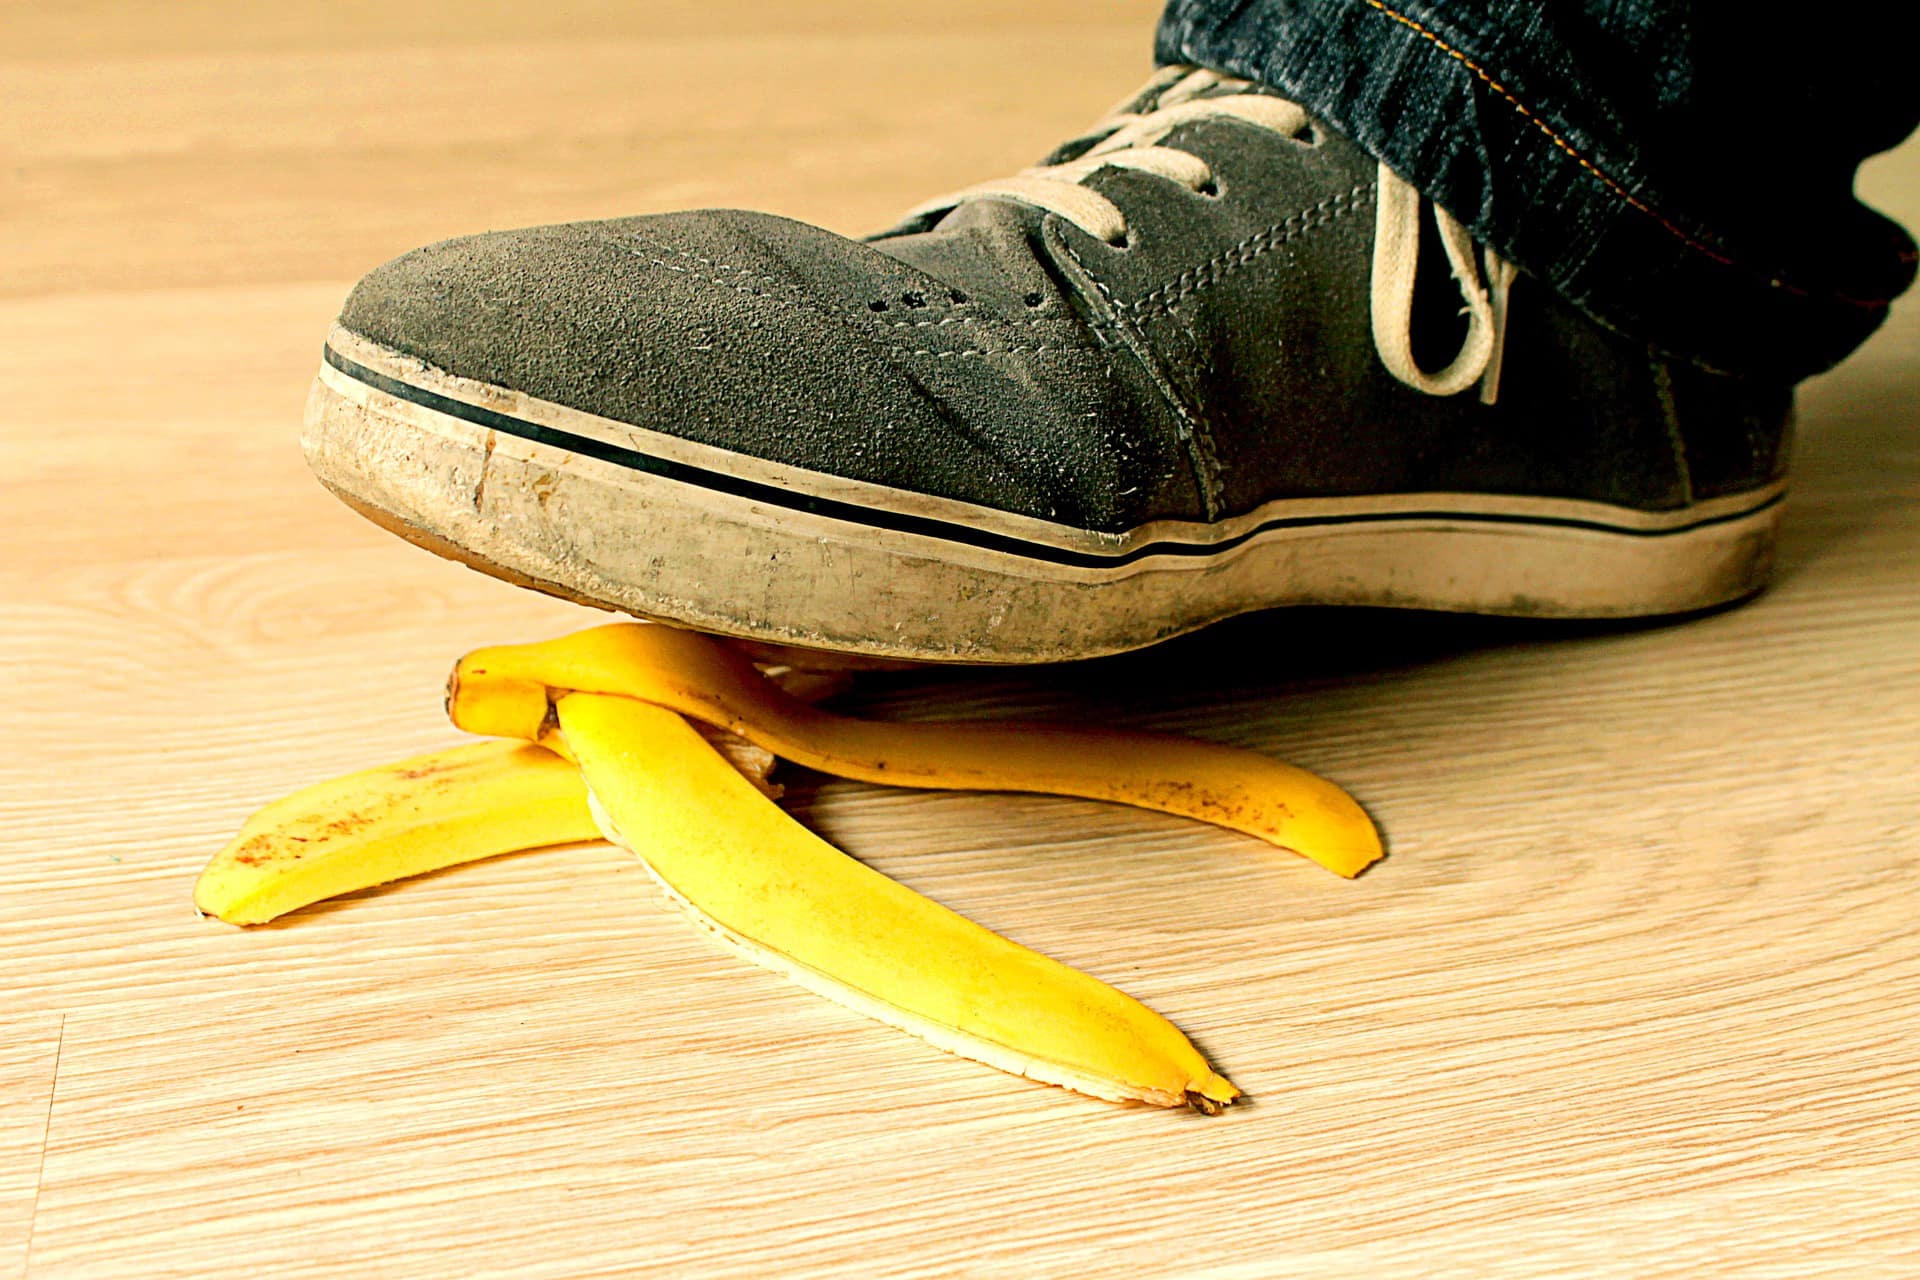 banana peel under foot.